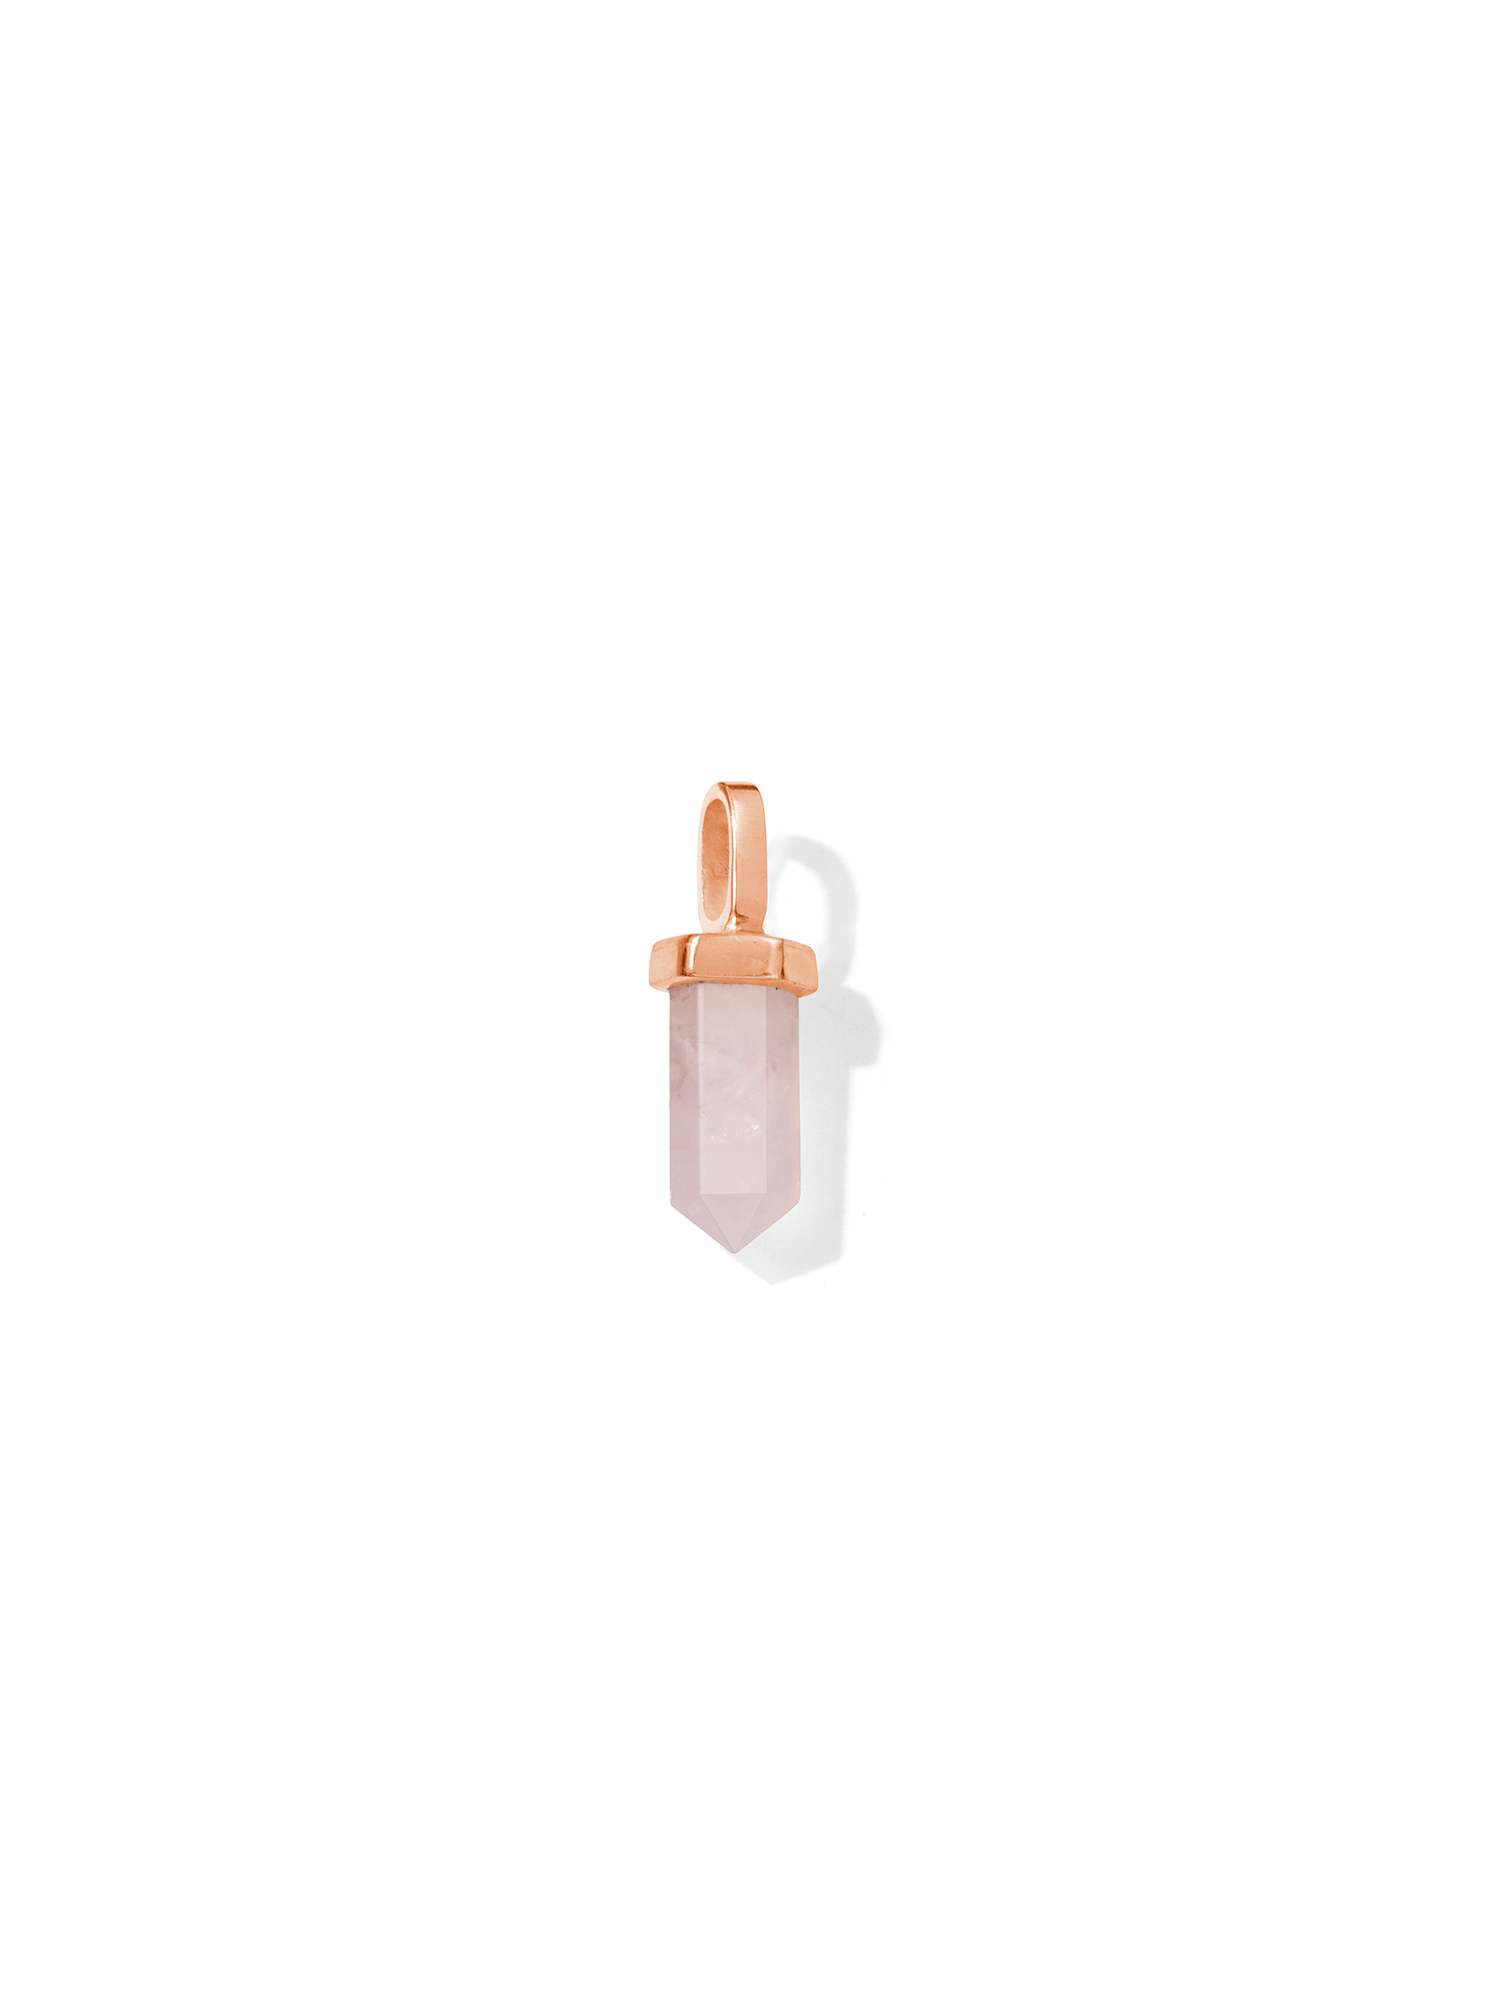 terminated crystal necklace charm | rose quartz